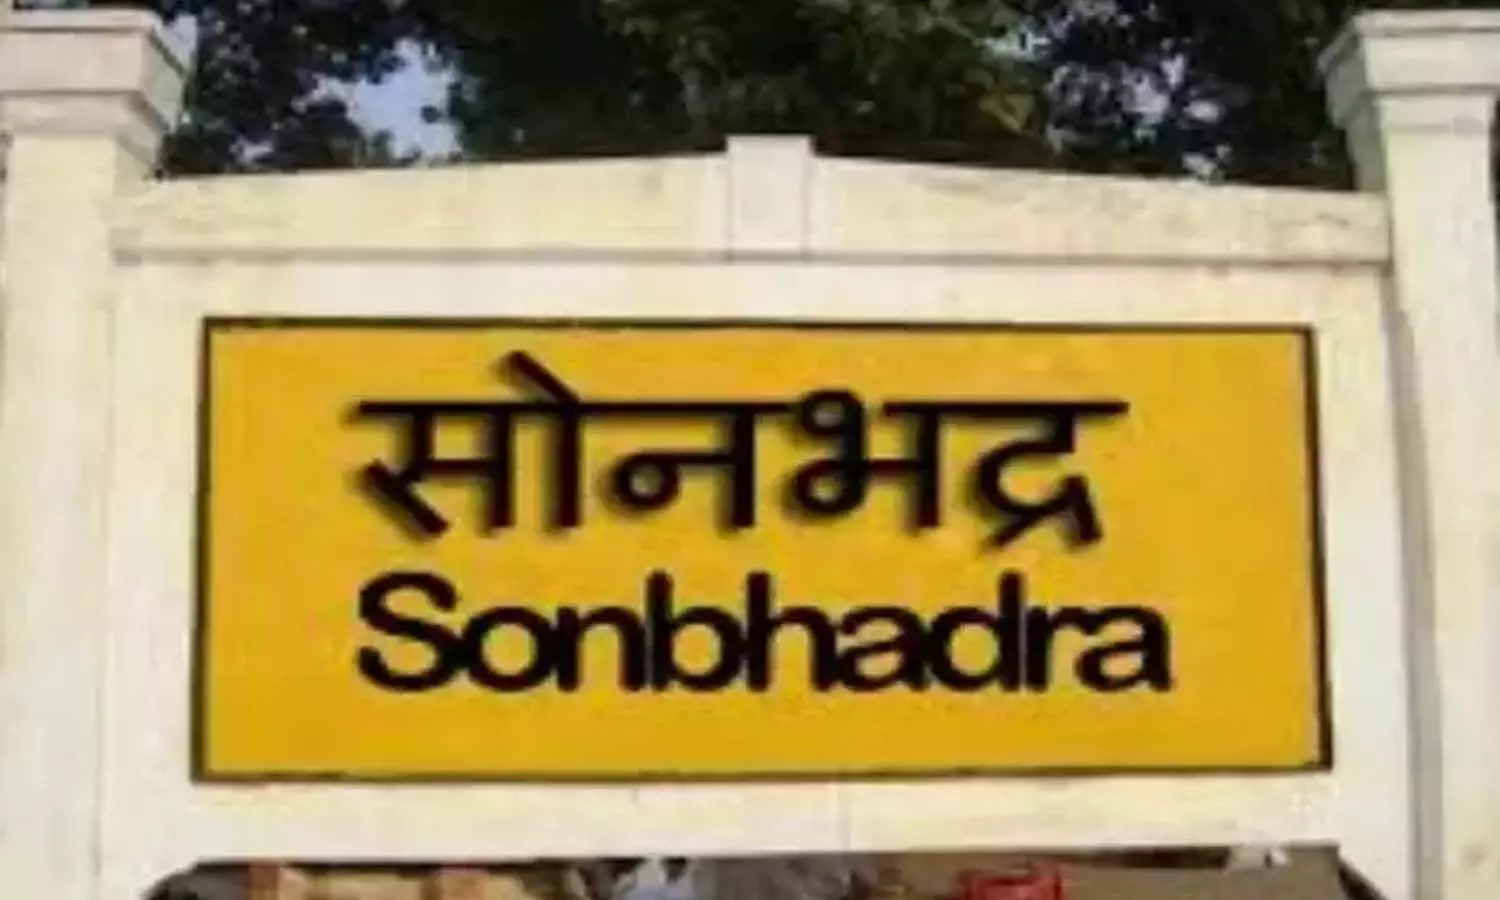 Deed of land deed in Sonbhadra got registered in wifes name